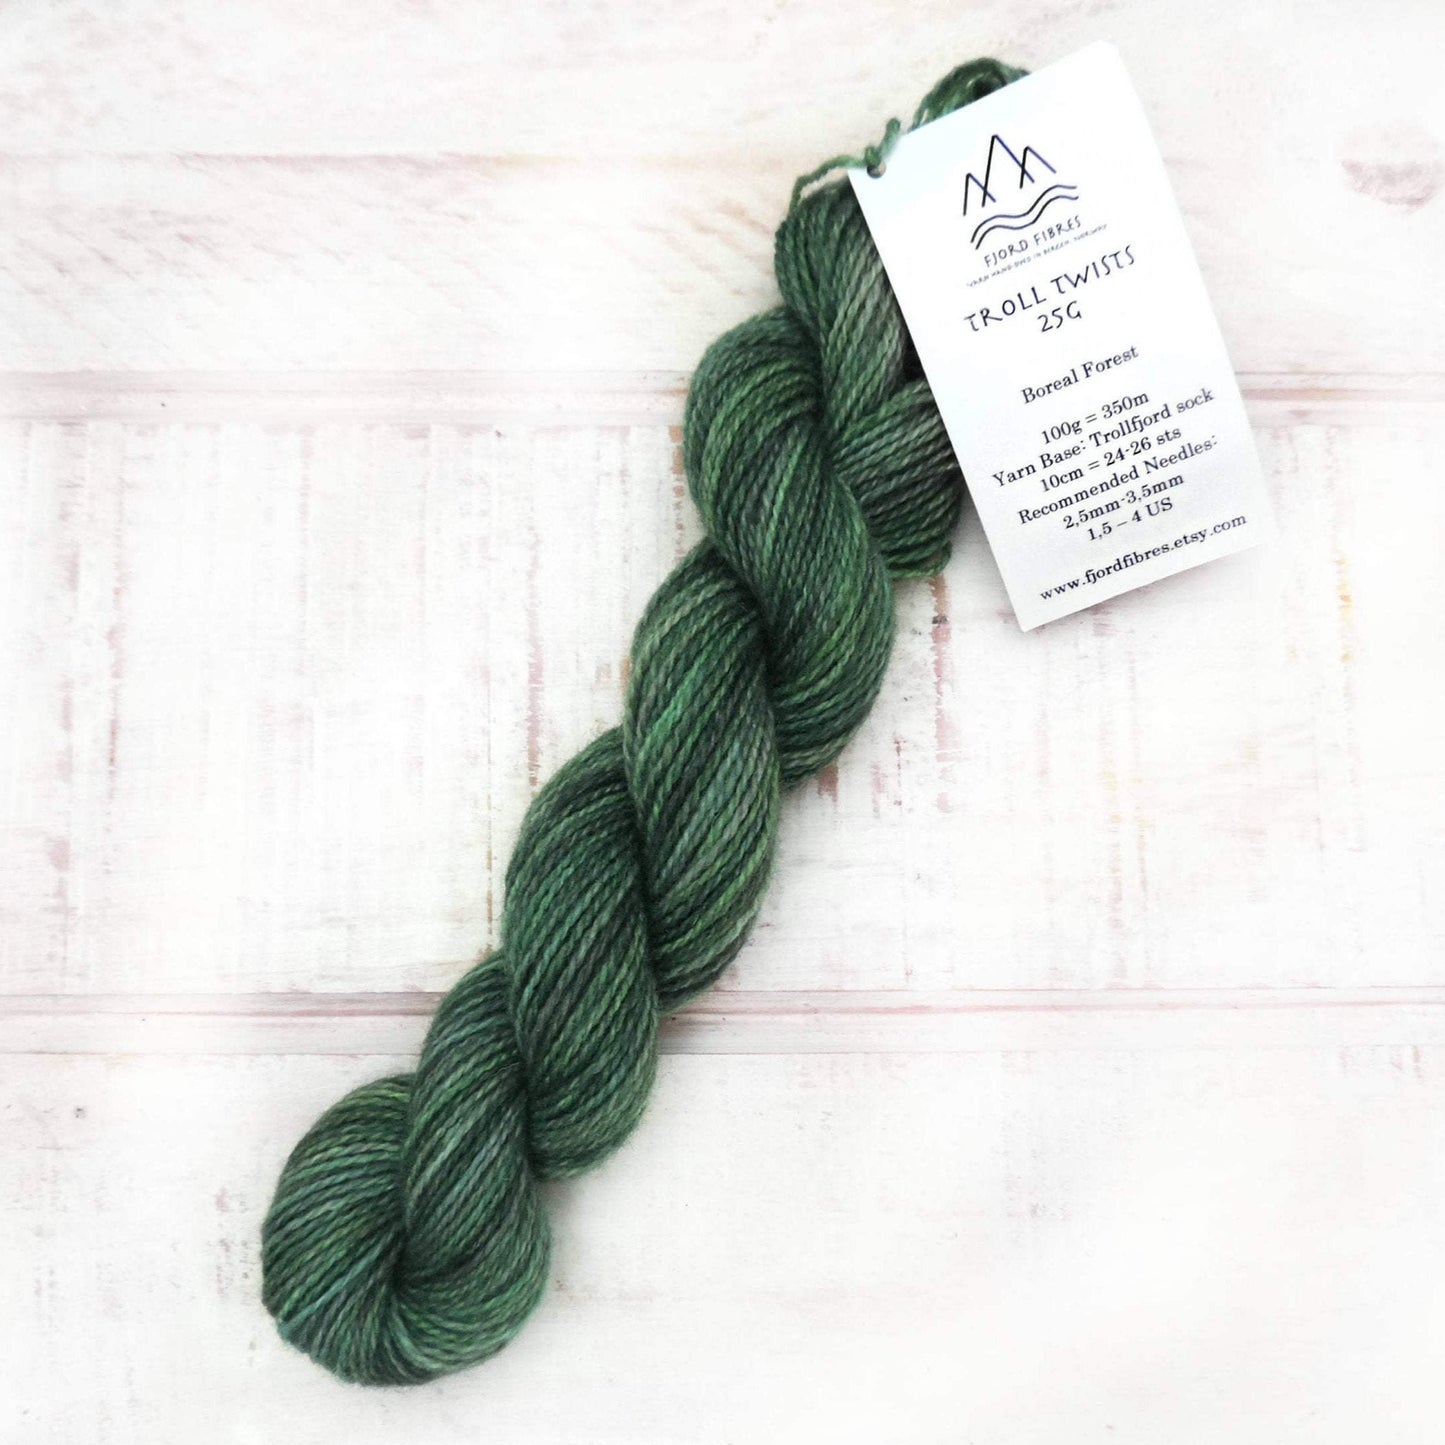 Boreal Forest - Trollfjord sock - Variegated Yarn - Hand dyed yarn